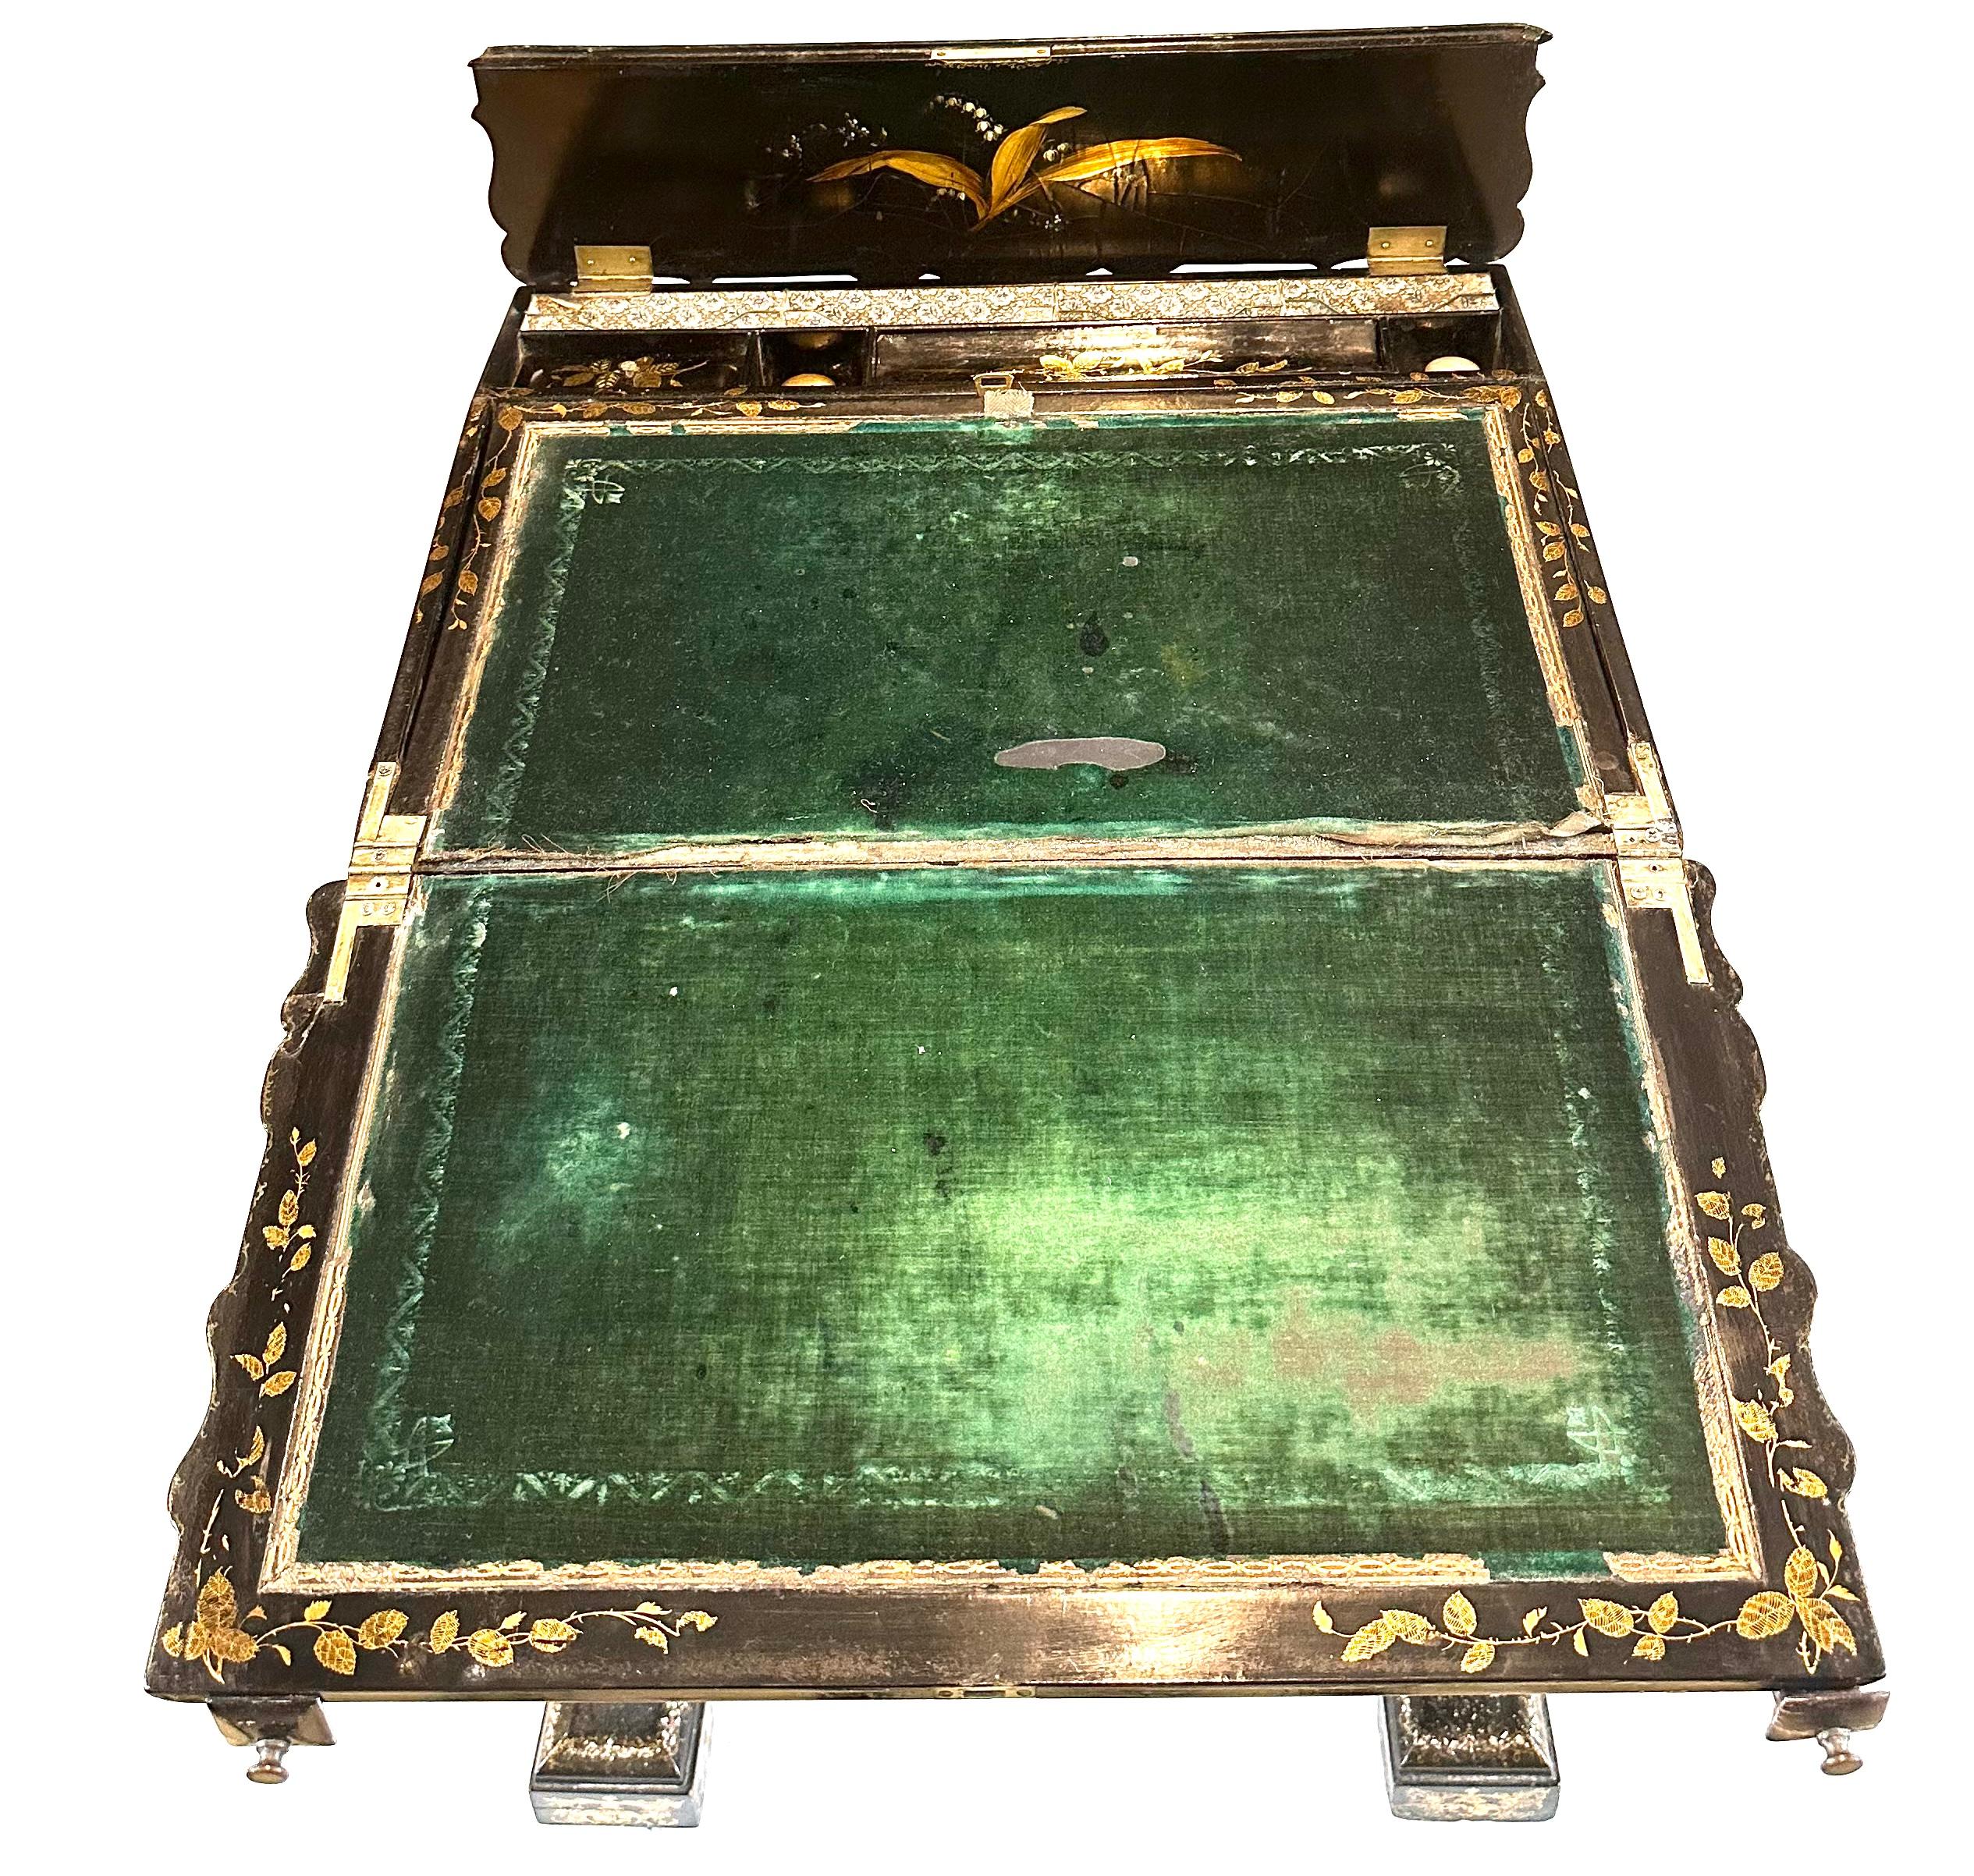 Victorian 19th Century Papier-mâché Mache Writing Desk and Games Table For Sale